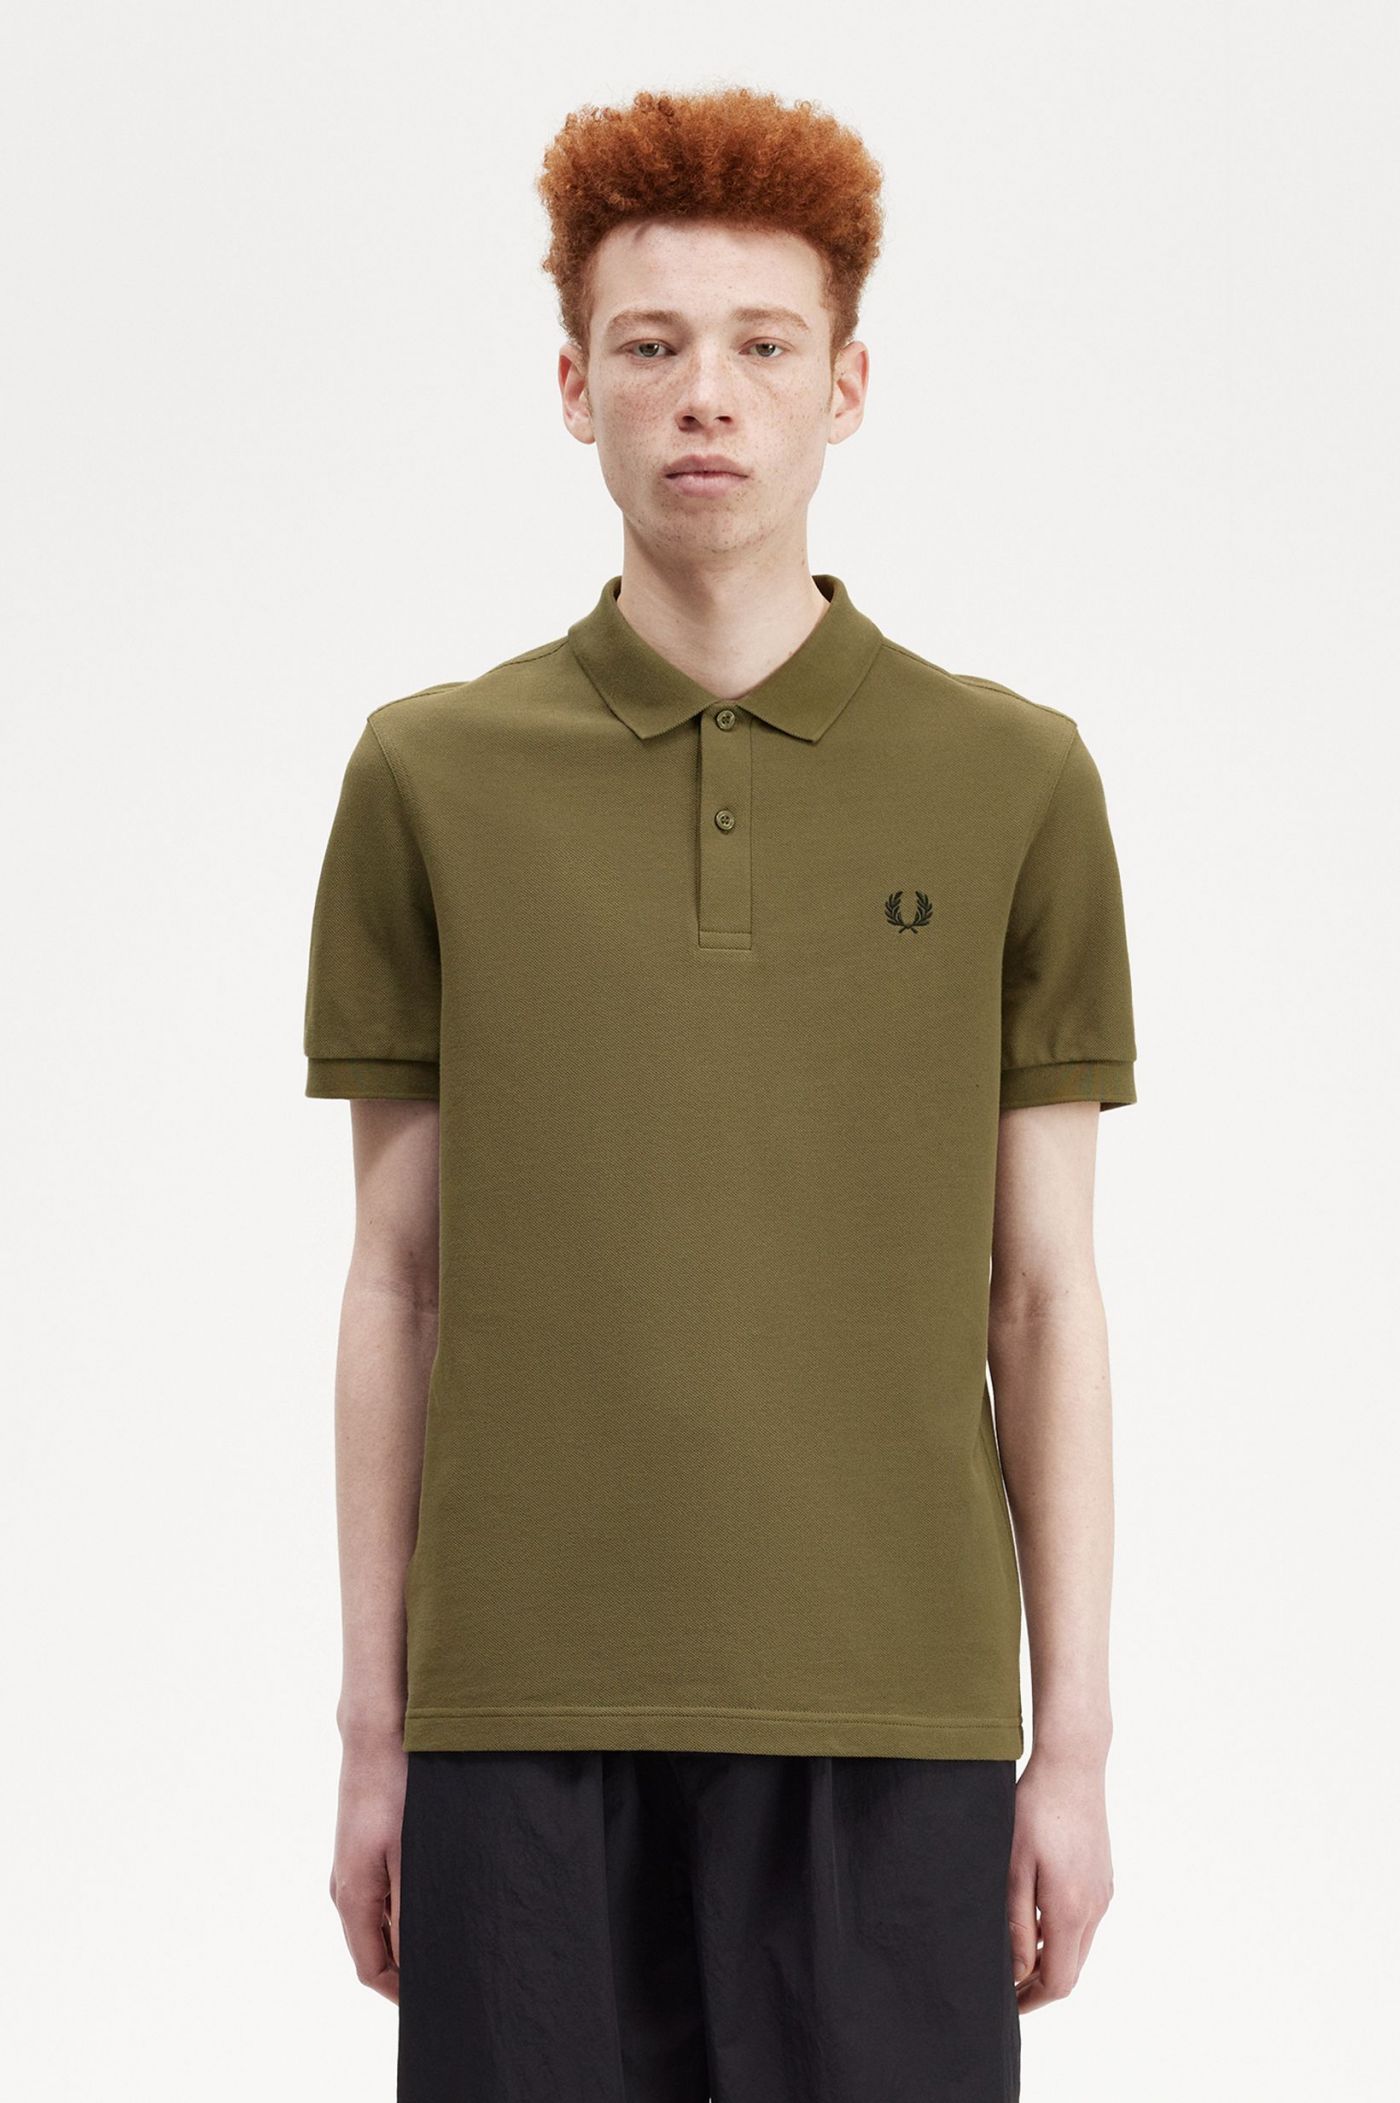 M6000 - Uniform Green / Black | The Fred Perry Shirt | Men's Short ...